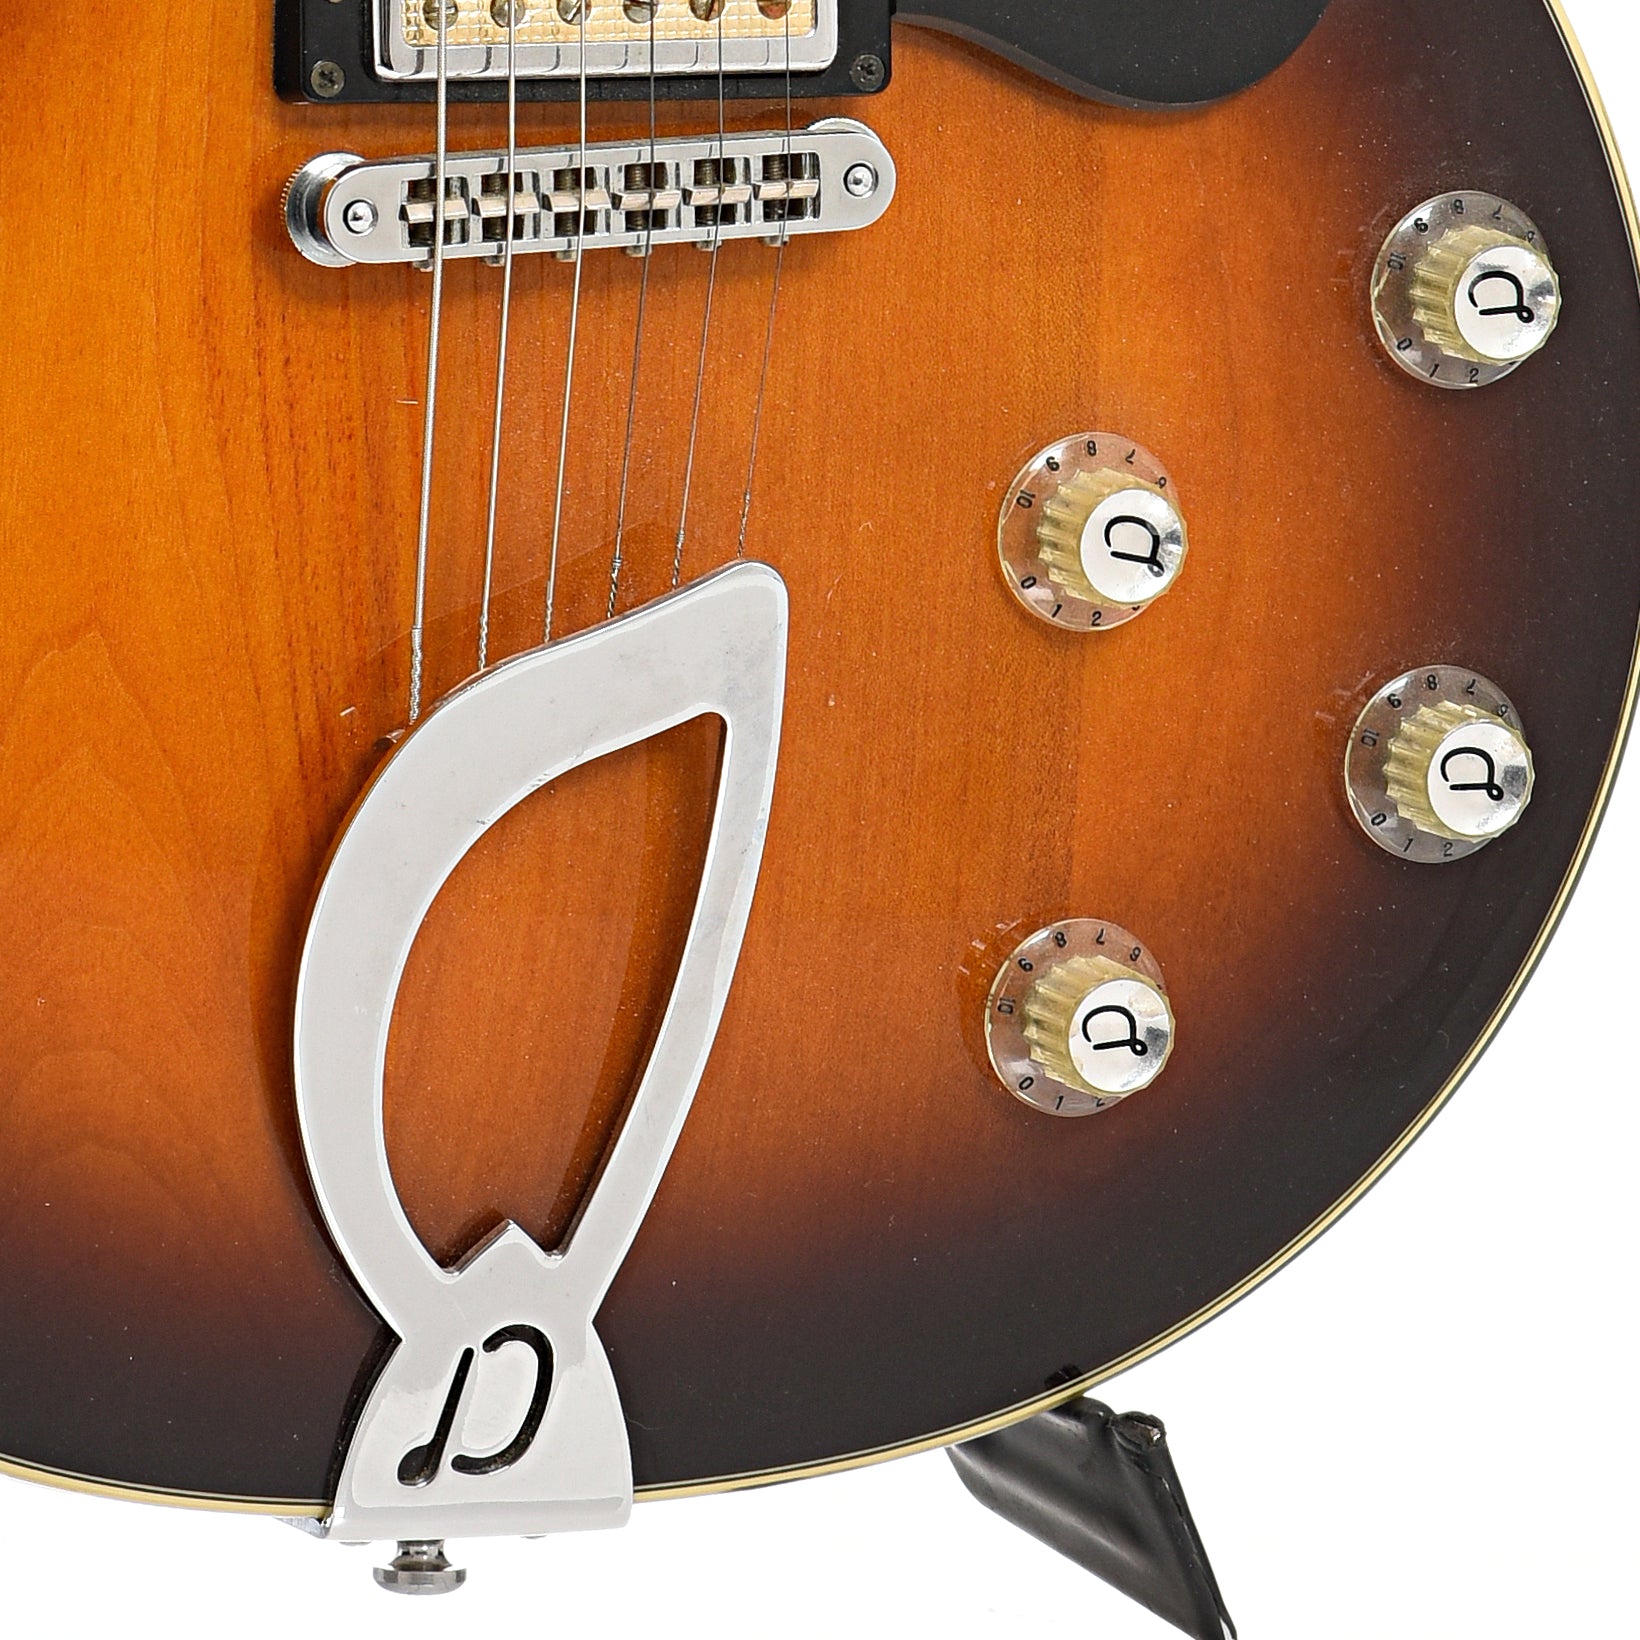 Tailpiece, bridge and controls of DeArmond M-75 Electric Guitar (c.2009)